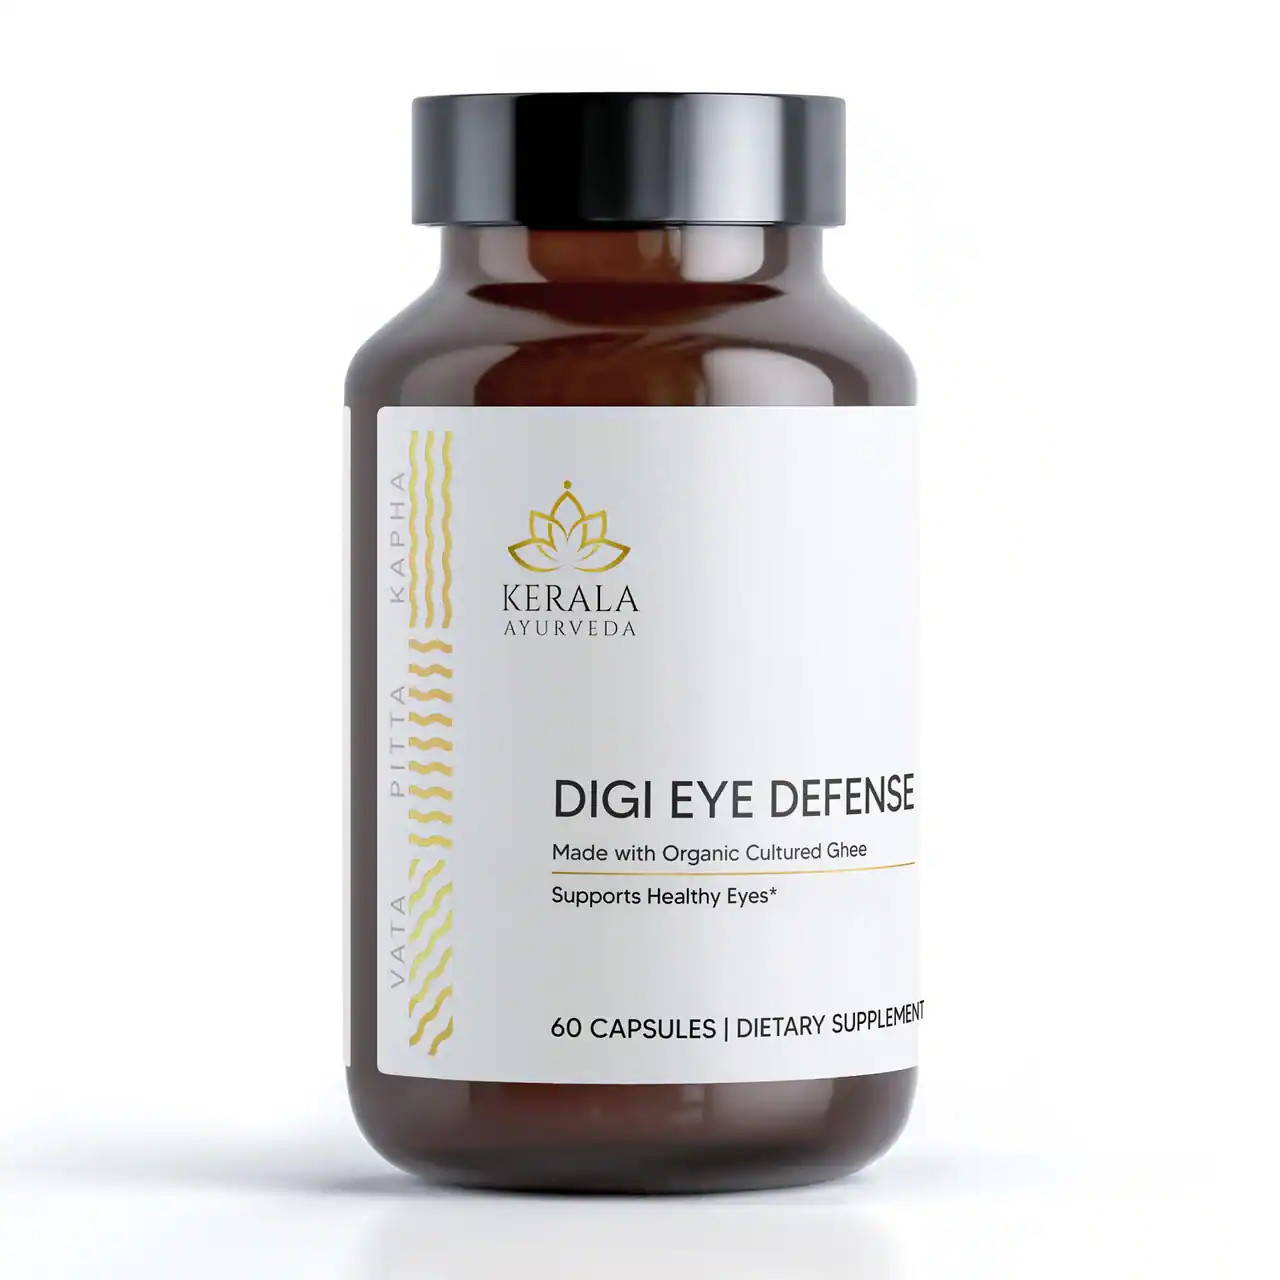 Digi Eye Defense